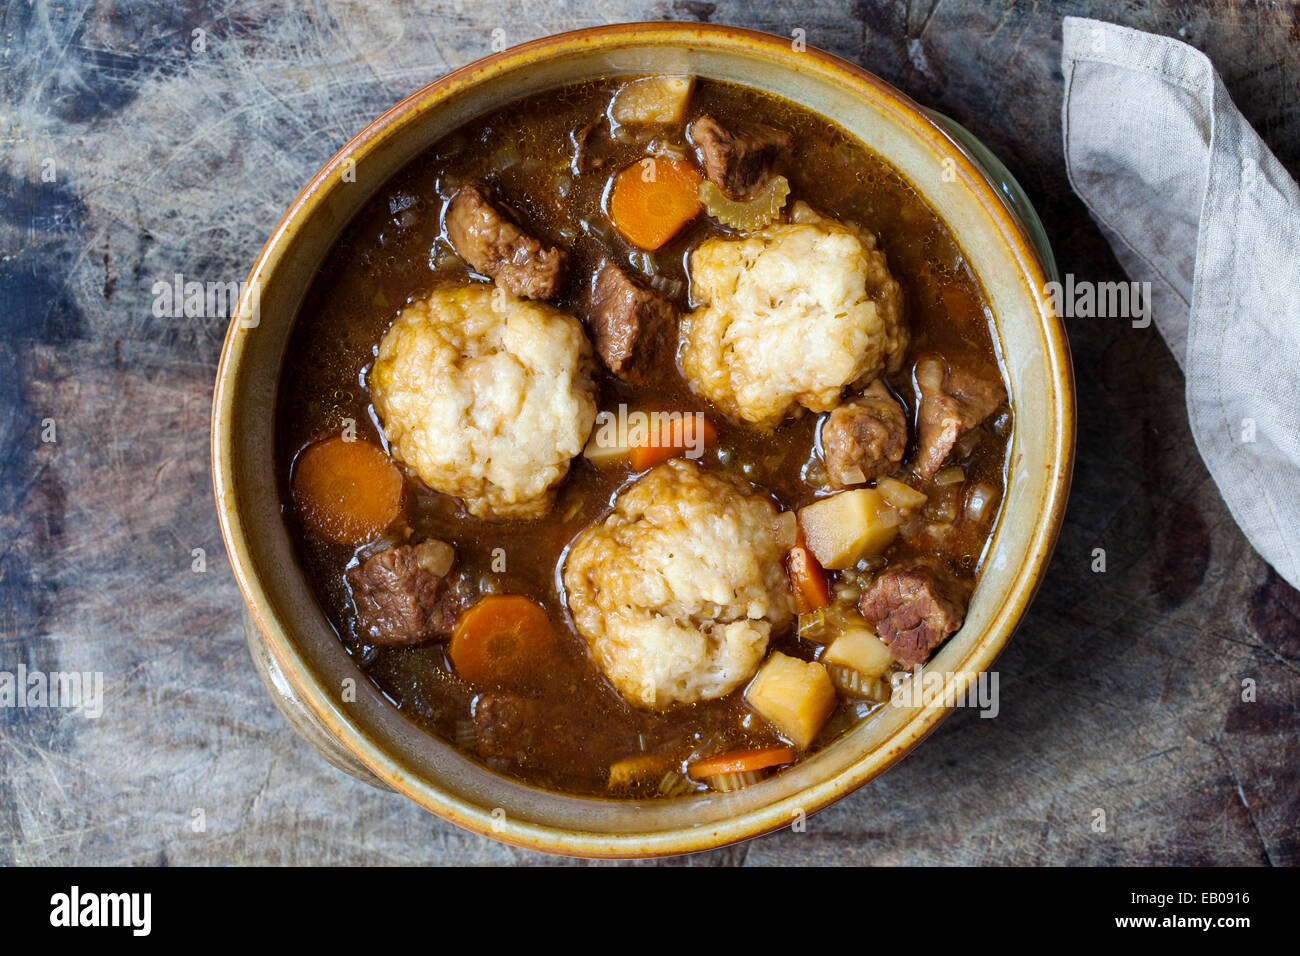 Beef stew with dumplings Stock Photo